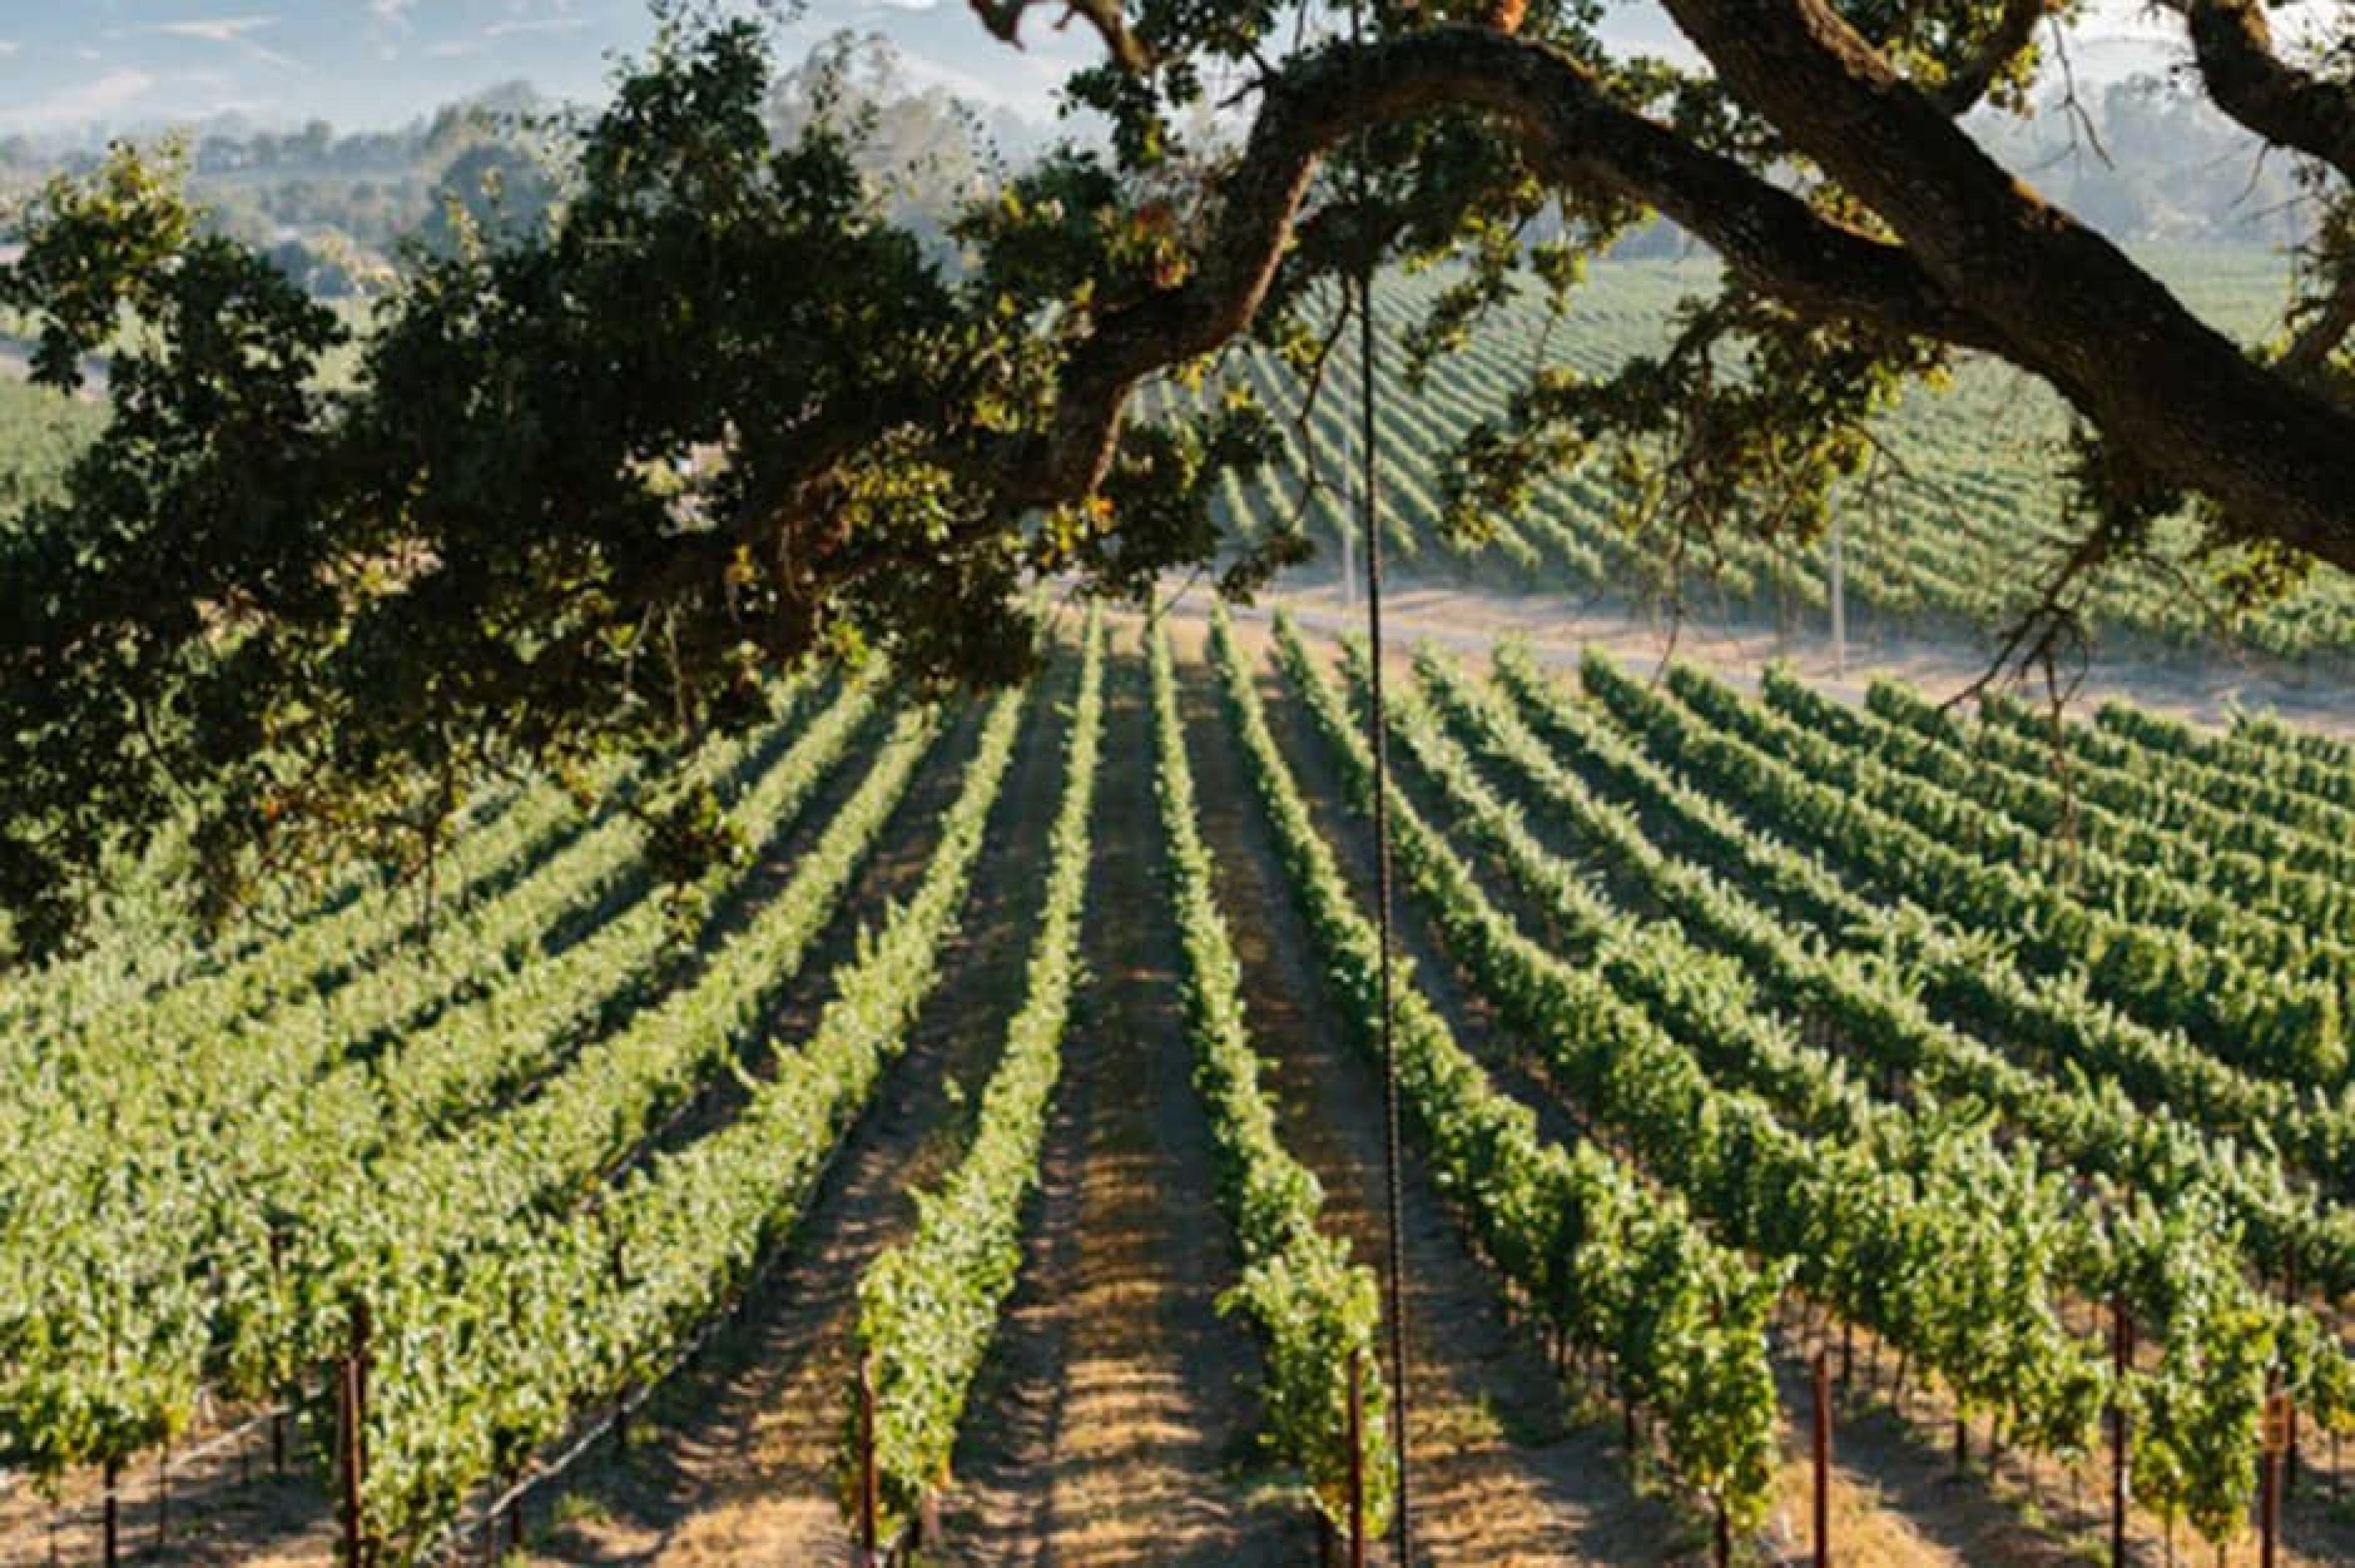 Fields at Scribe Winery, Sonoma, California - Courtesy Allan Zepeda